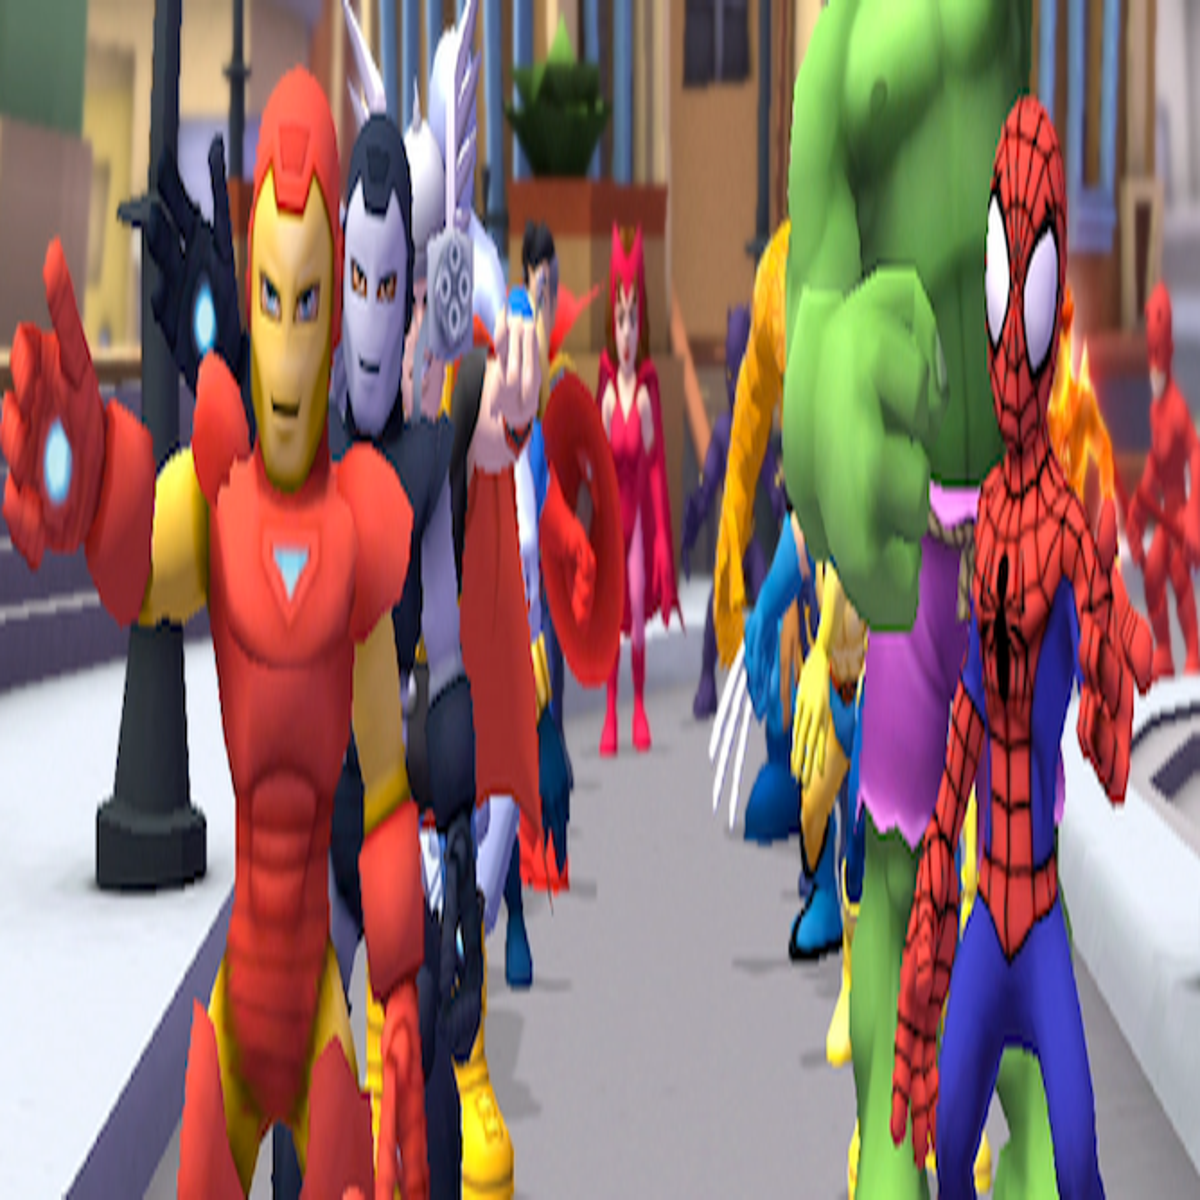 Marvel Super hero squad online